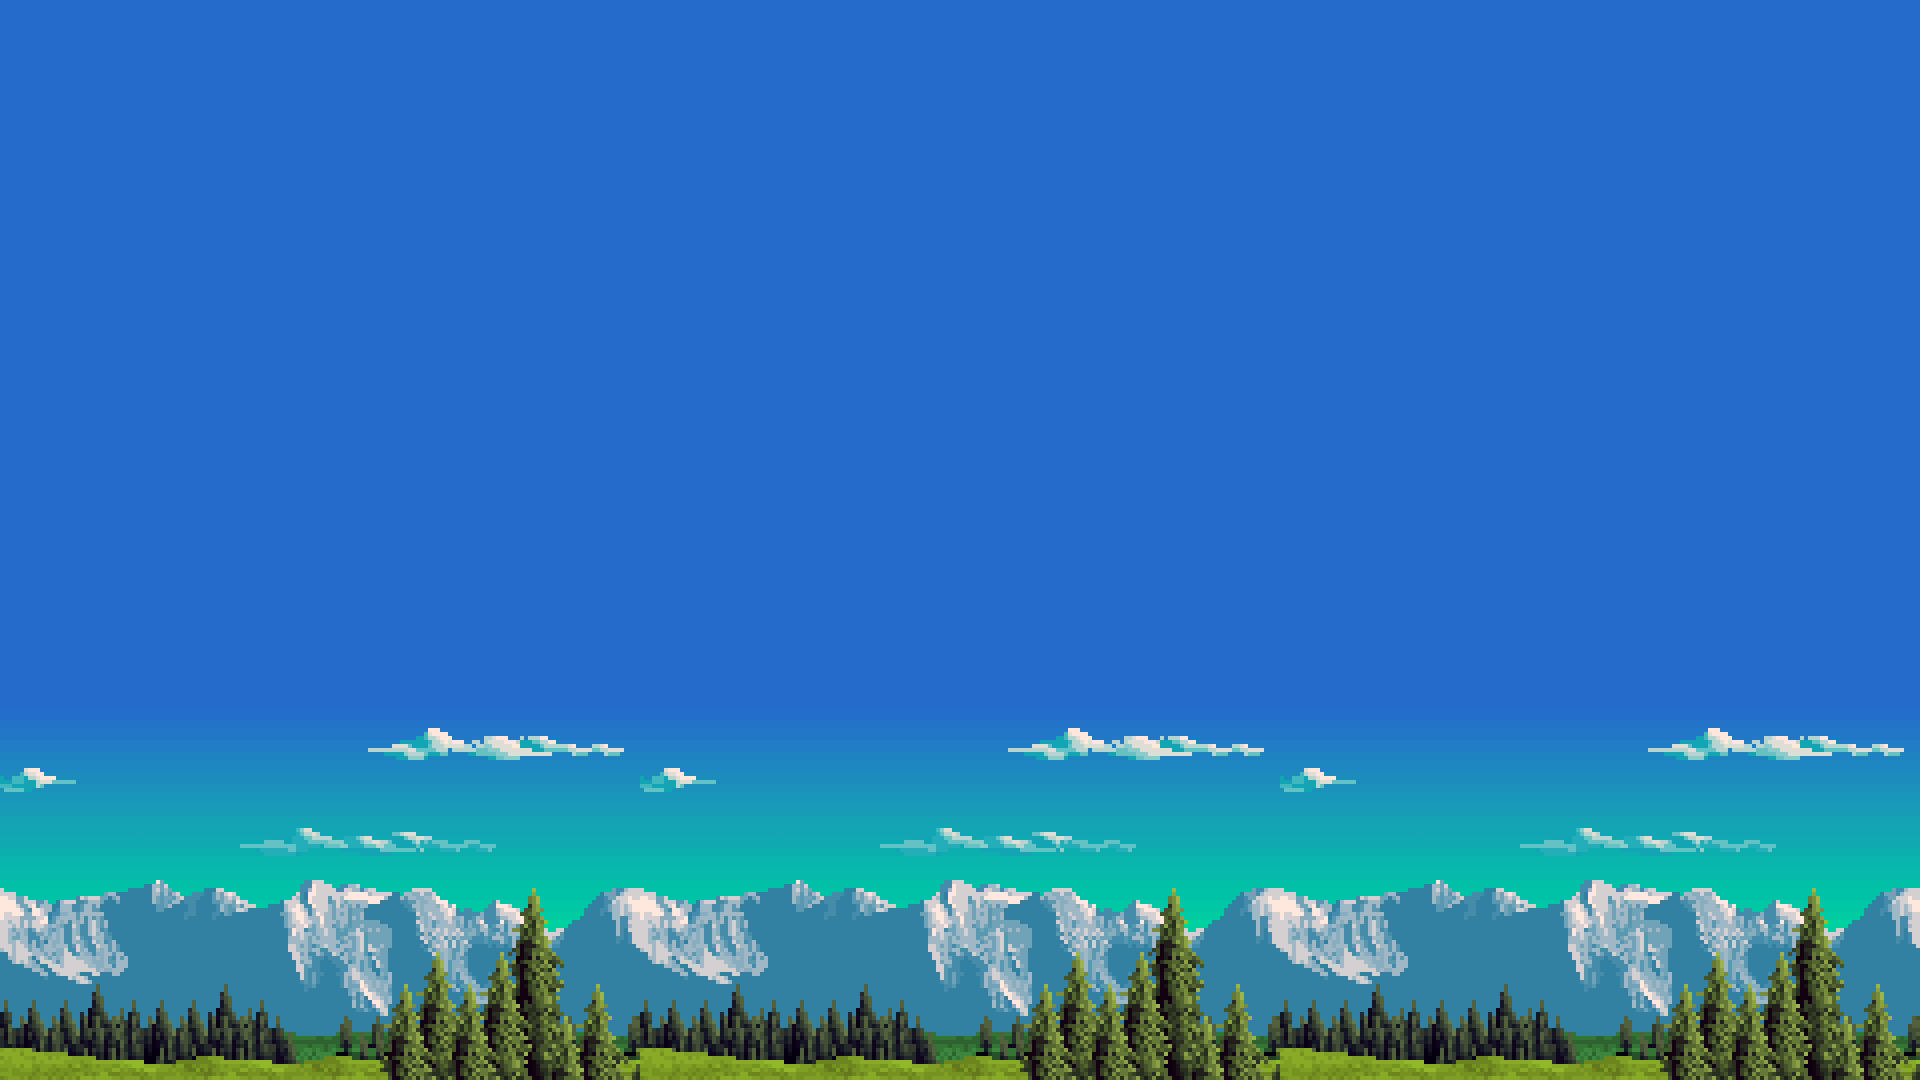 Pixel Art Landscapes